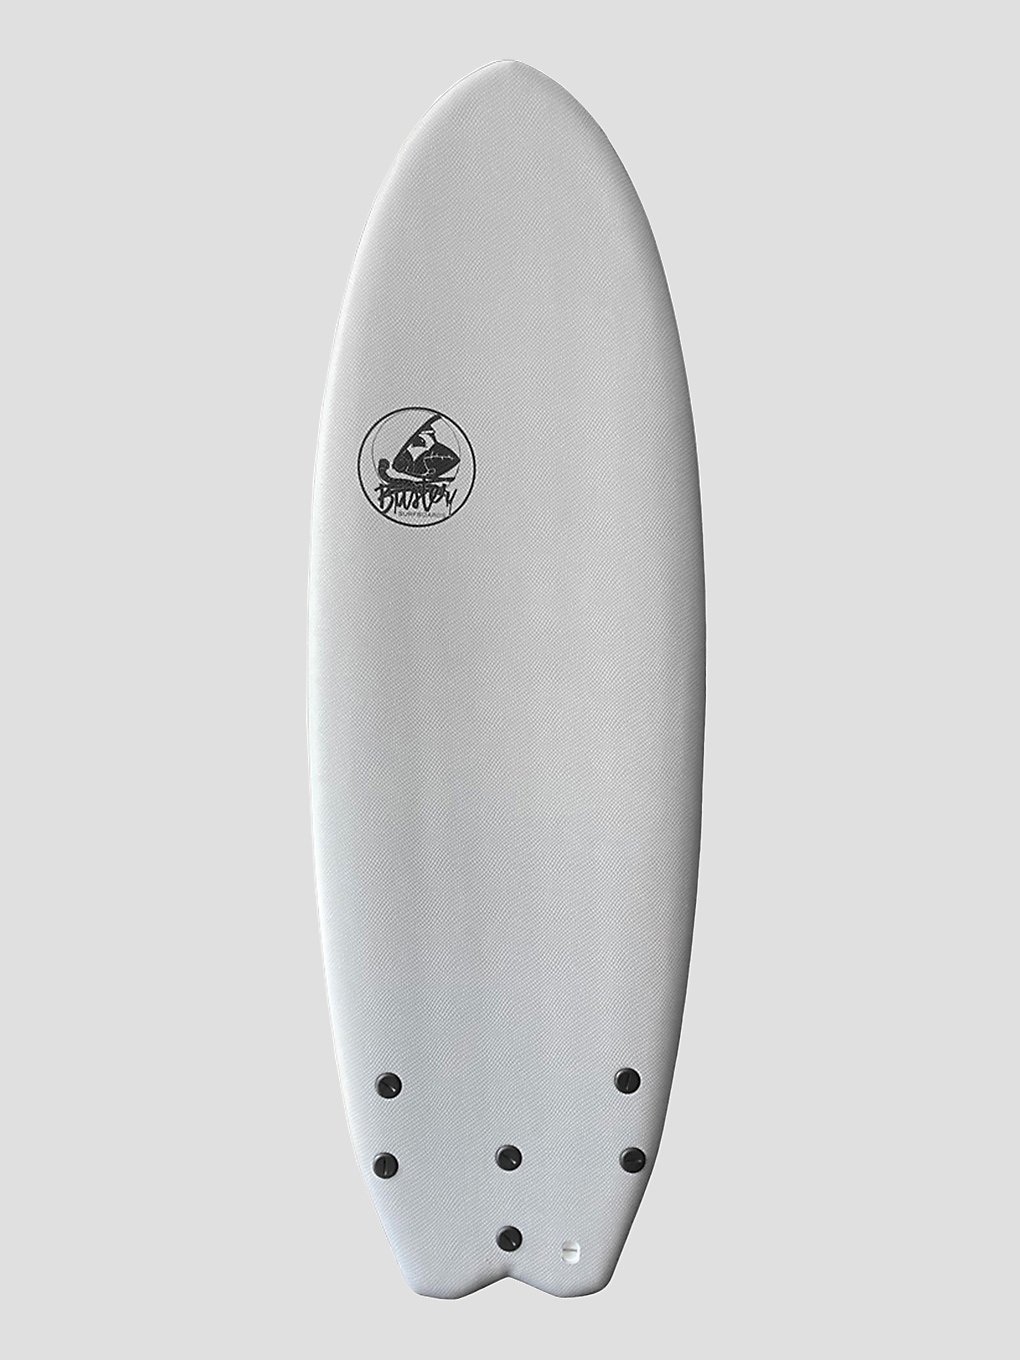 Buster Space Twin Puffin Softboard 4’10 Riversurf / Rapid Surfboard Einsteiger